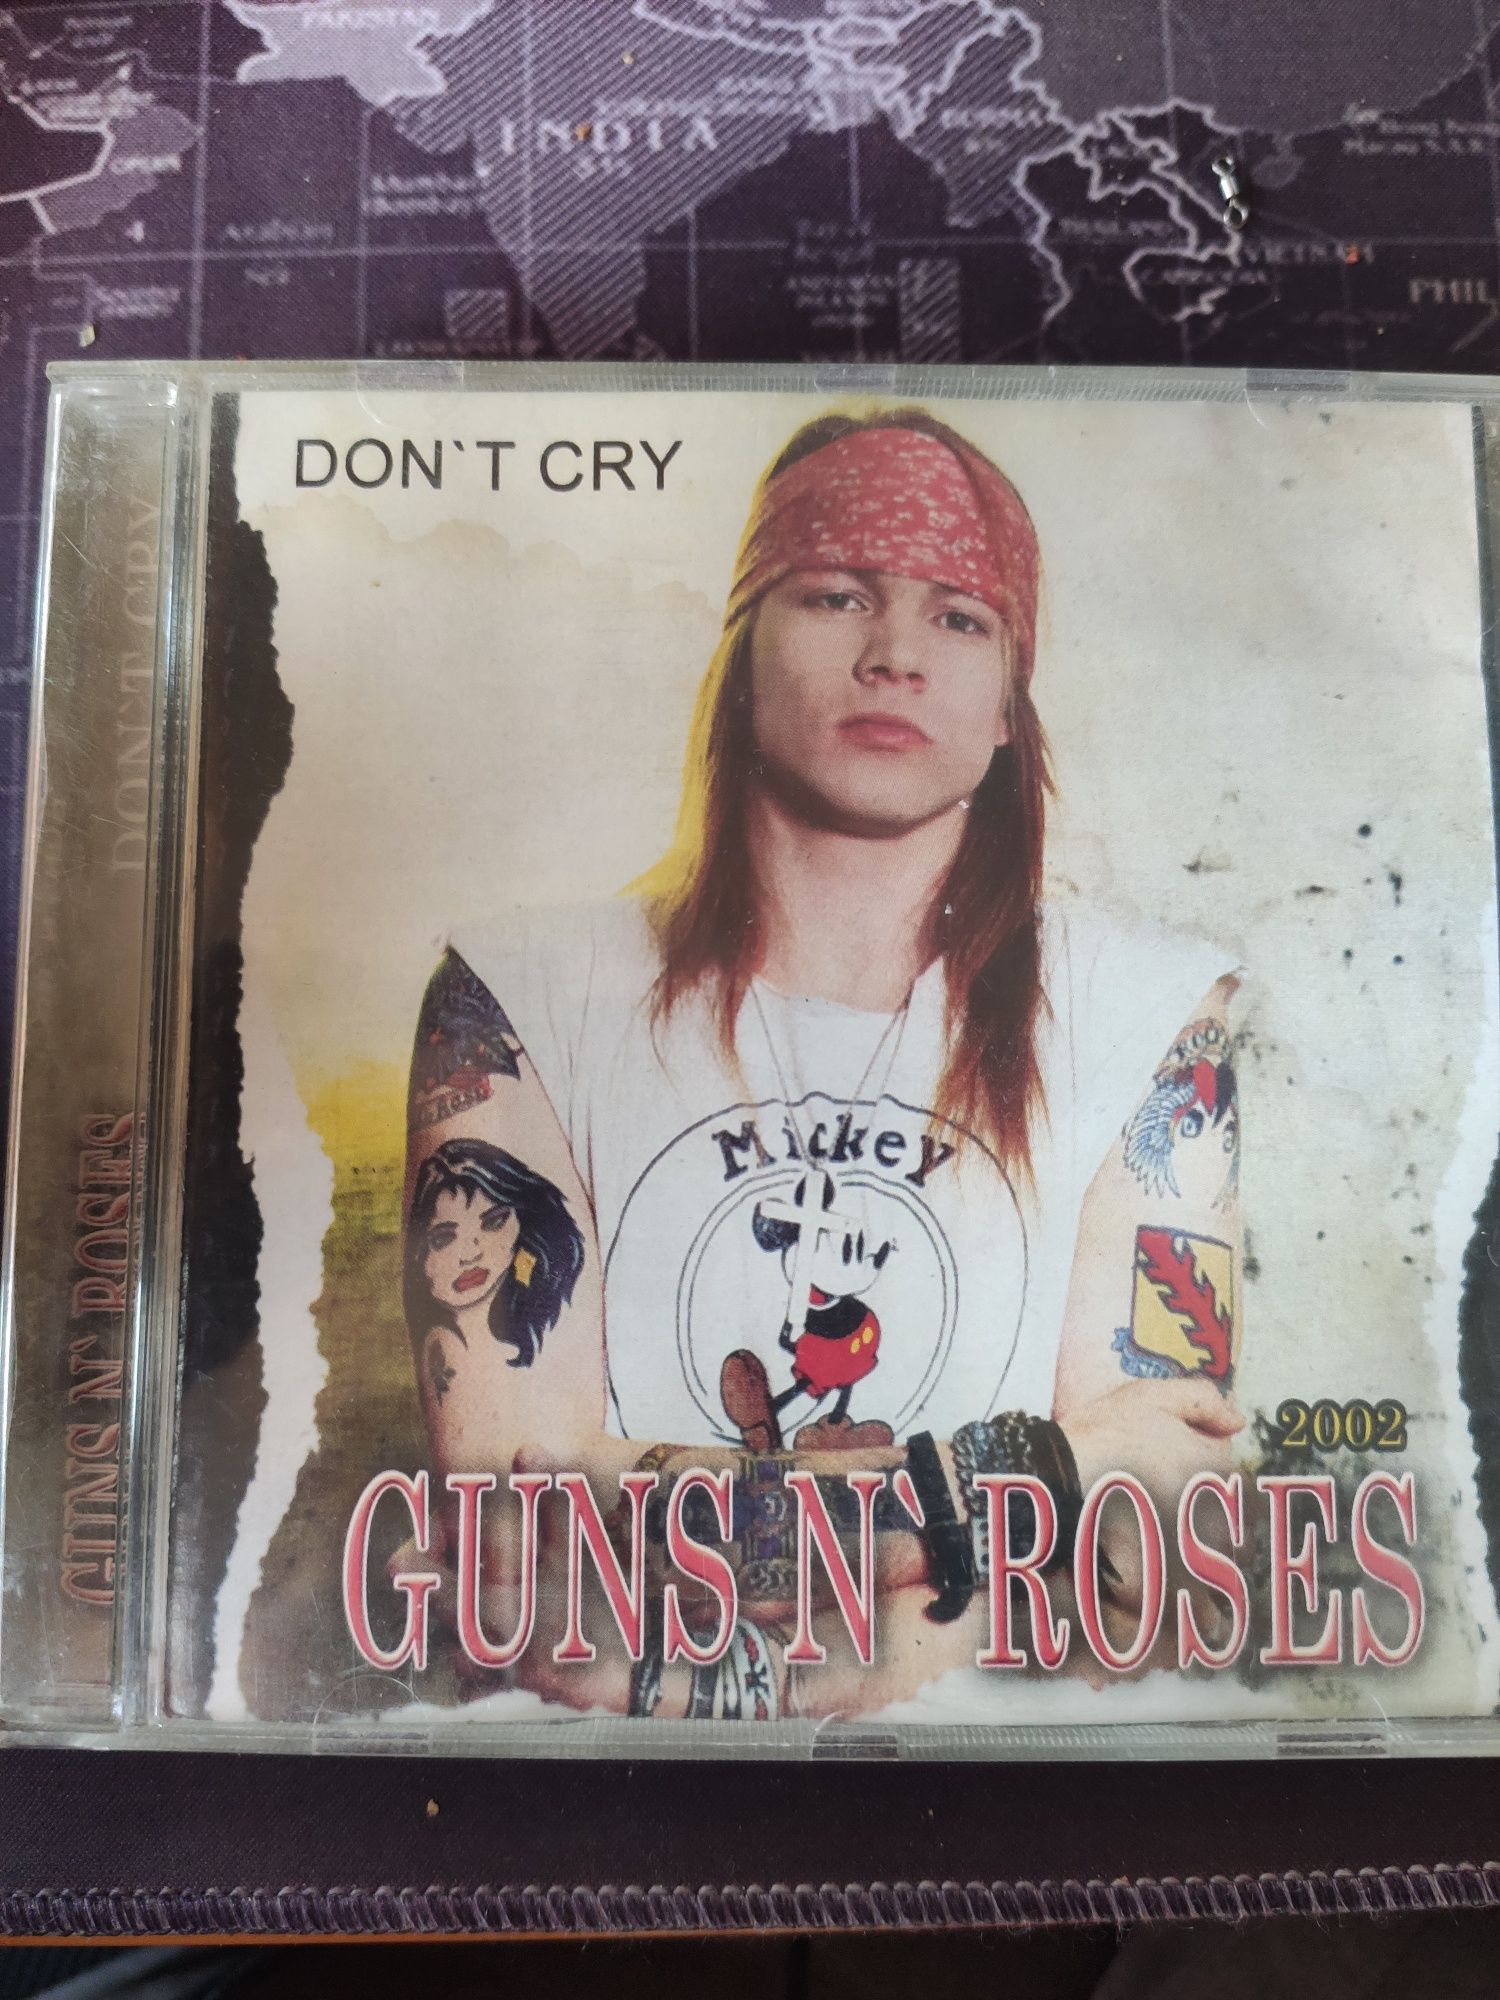 Guns n'roses don't cry CD jedyna taka na olx czy allegro